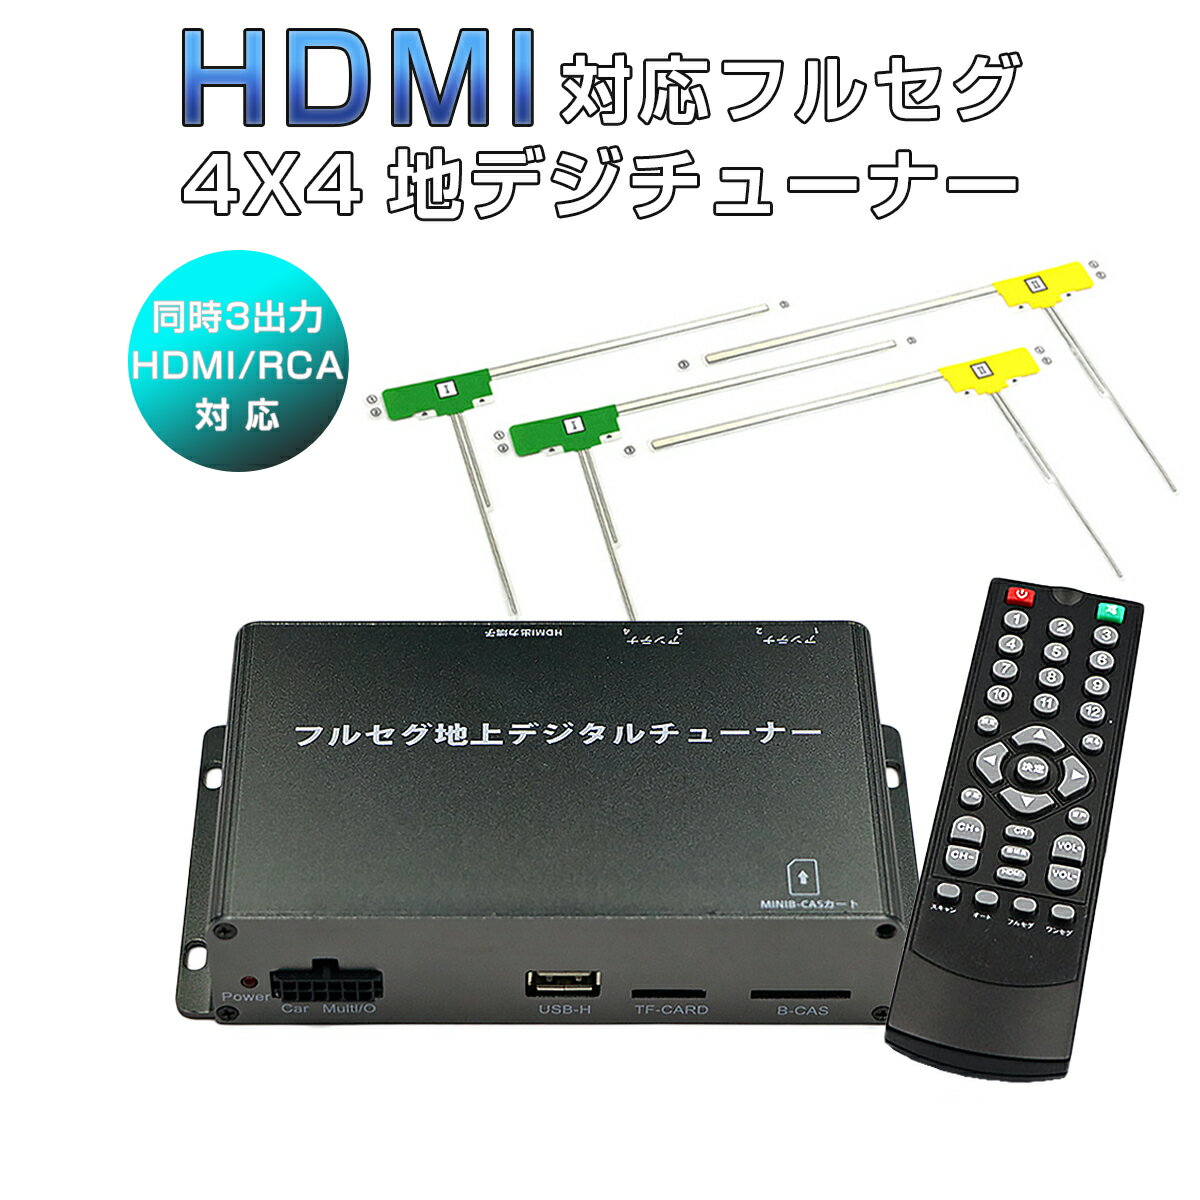 NISSAN用の非純正品 アベニール 地デジチューナー カーナビ ワンセグ フルセグ HDMI 4x4 高性能 4チューナー 4アンテナ 高画質 自動切換 150km/hまで受信 古い車載TVやカーナビにも使える 12V/24V フィルムアンテナ miniB-CASカード付き 6ヶ月保証